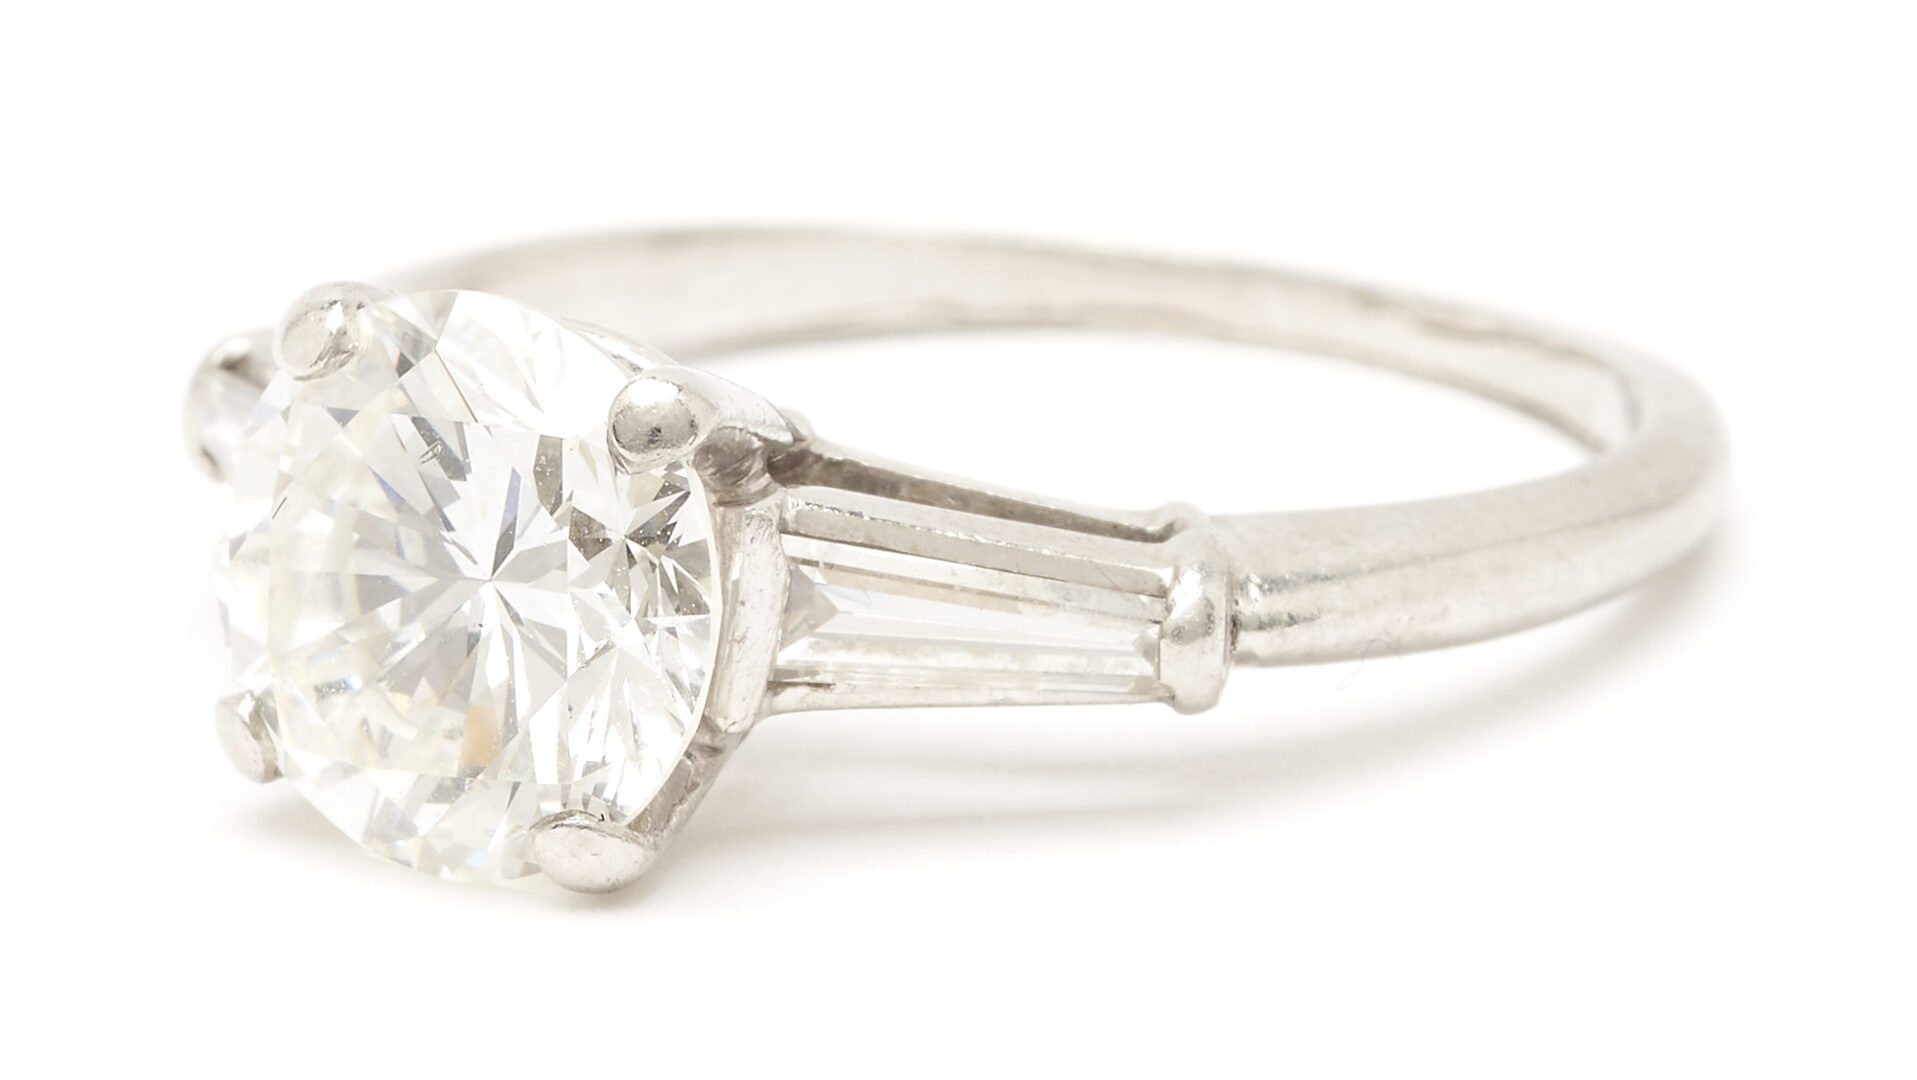 Lot 27: 2.03 Carat Platinum & Diamond Engagement Ring, GIA Report